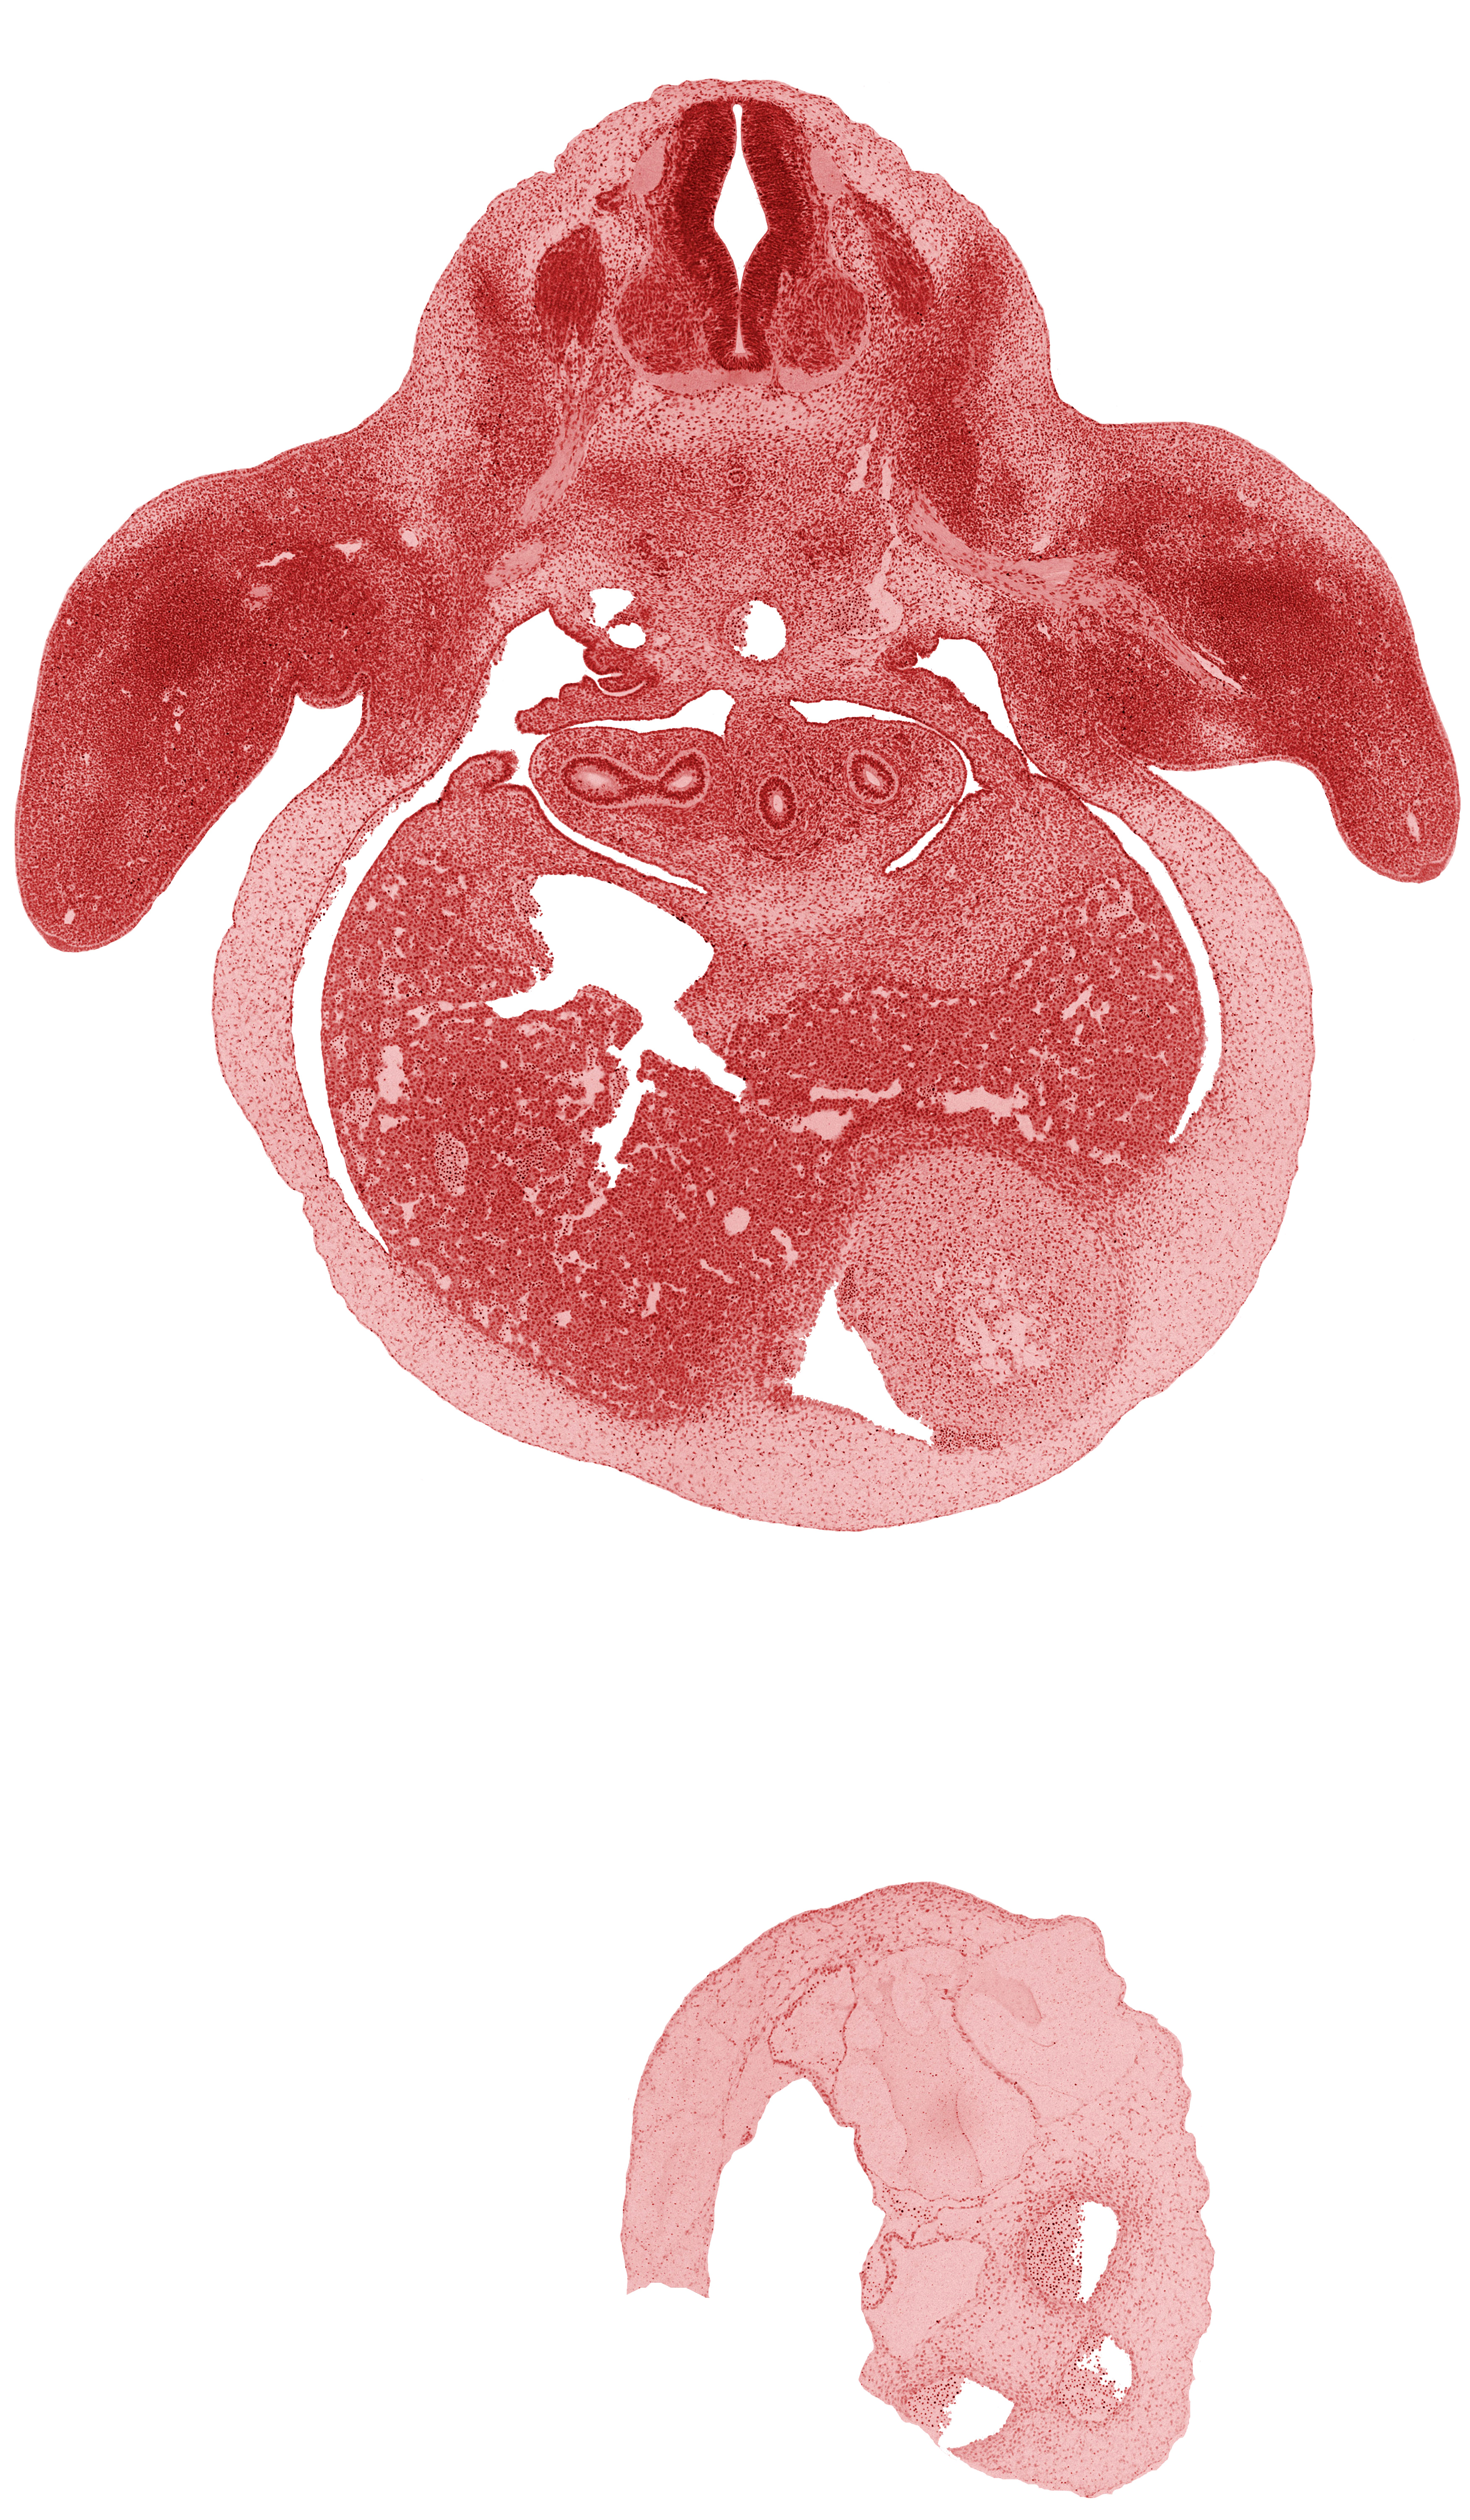 aorta, brachial plexus, dorsal fasciculus, efferent hepatic veins, forearm, hepatic part of inferior vena cava, left lobe of liver, left ventricle, lower secondary bronchus bud, median nerve, middle secondary bronchus bud, neural arch, pericardial cavity, pleuroperitoneal membrane, postcardinal vein, primordial paramesonephric groove, roof plate, septum transversum, union of C-7 and C-8 spinal ganglia